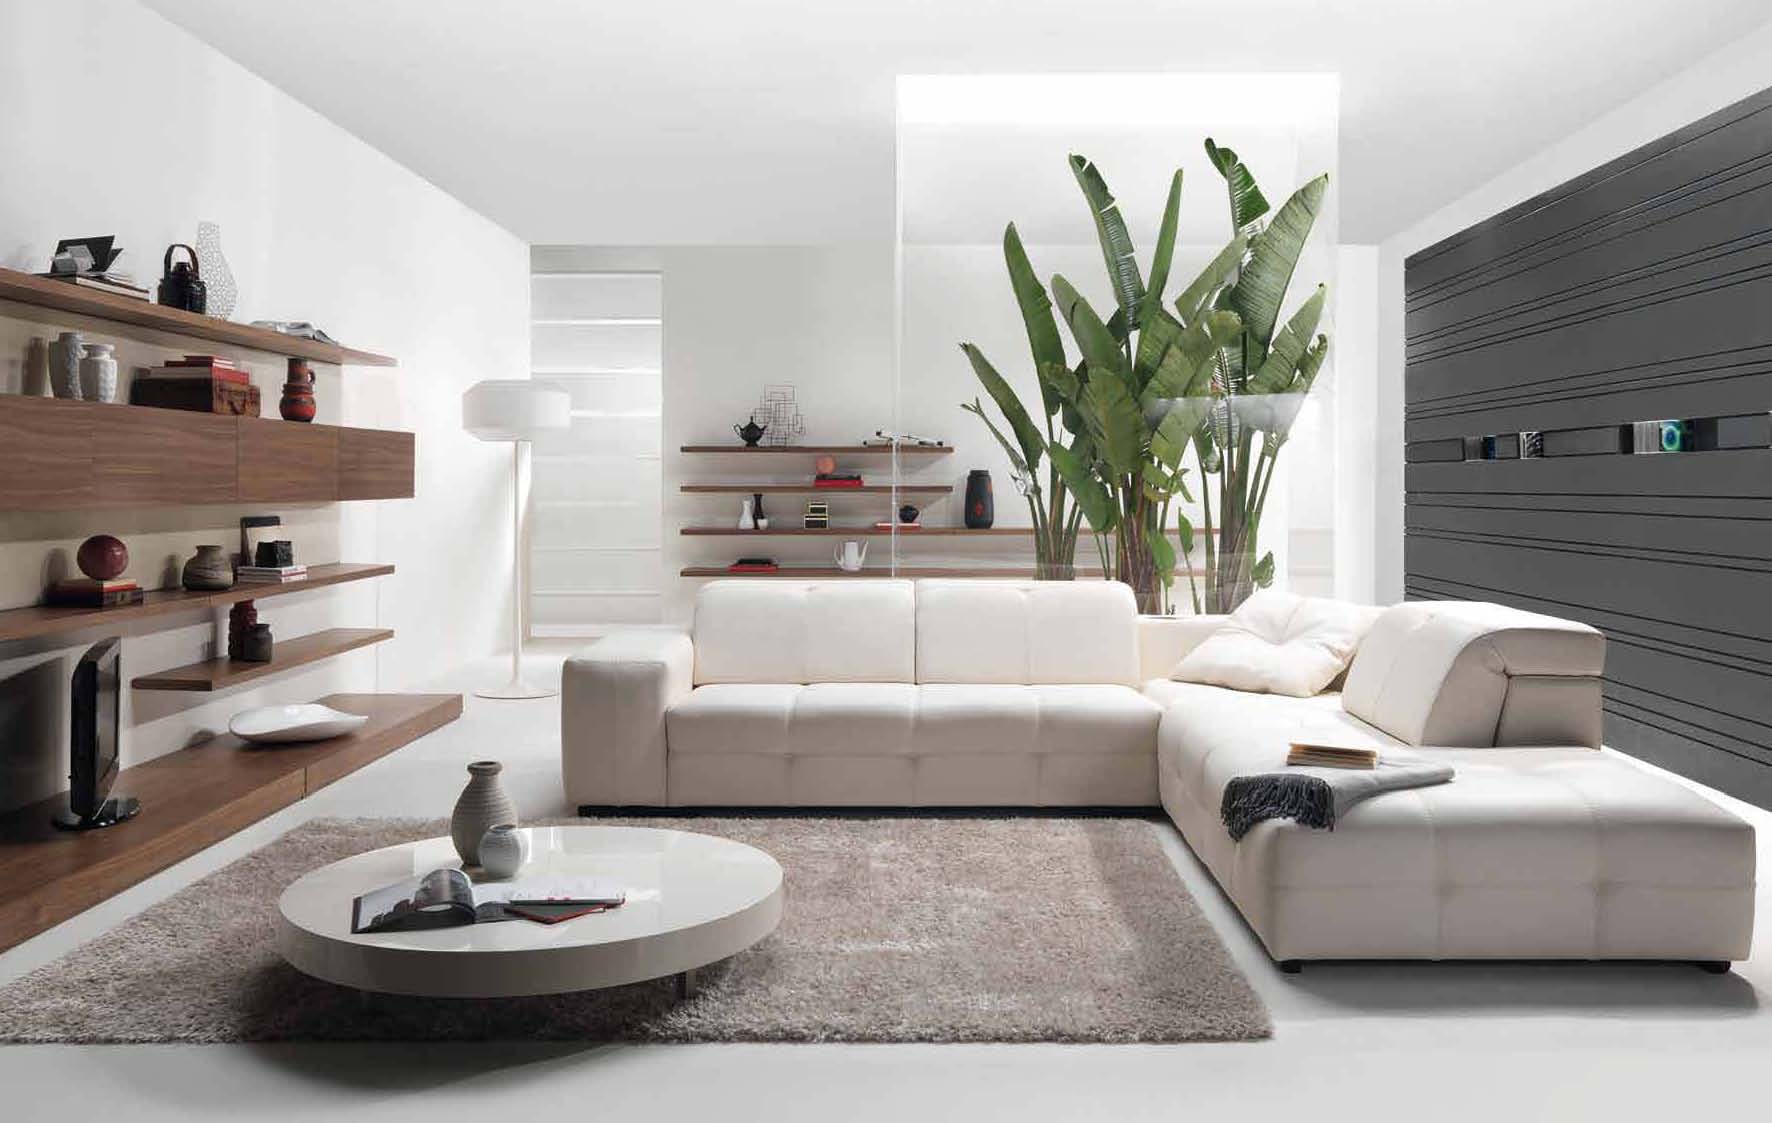 https://www.decorilla.com/online-decorating/wp-content/uploads/2014/07/modern-minimalist-style-living-room-decorating-with-shaggy-rug-best-interior-design-ideas.jpg